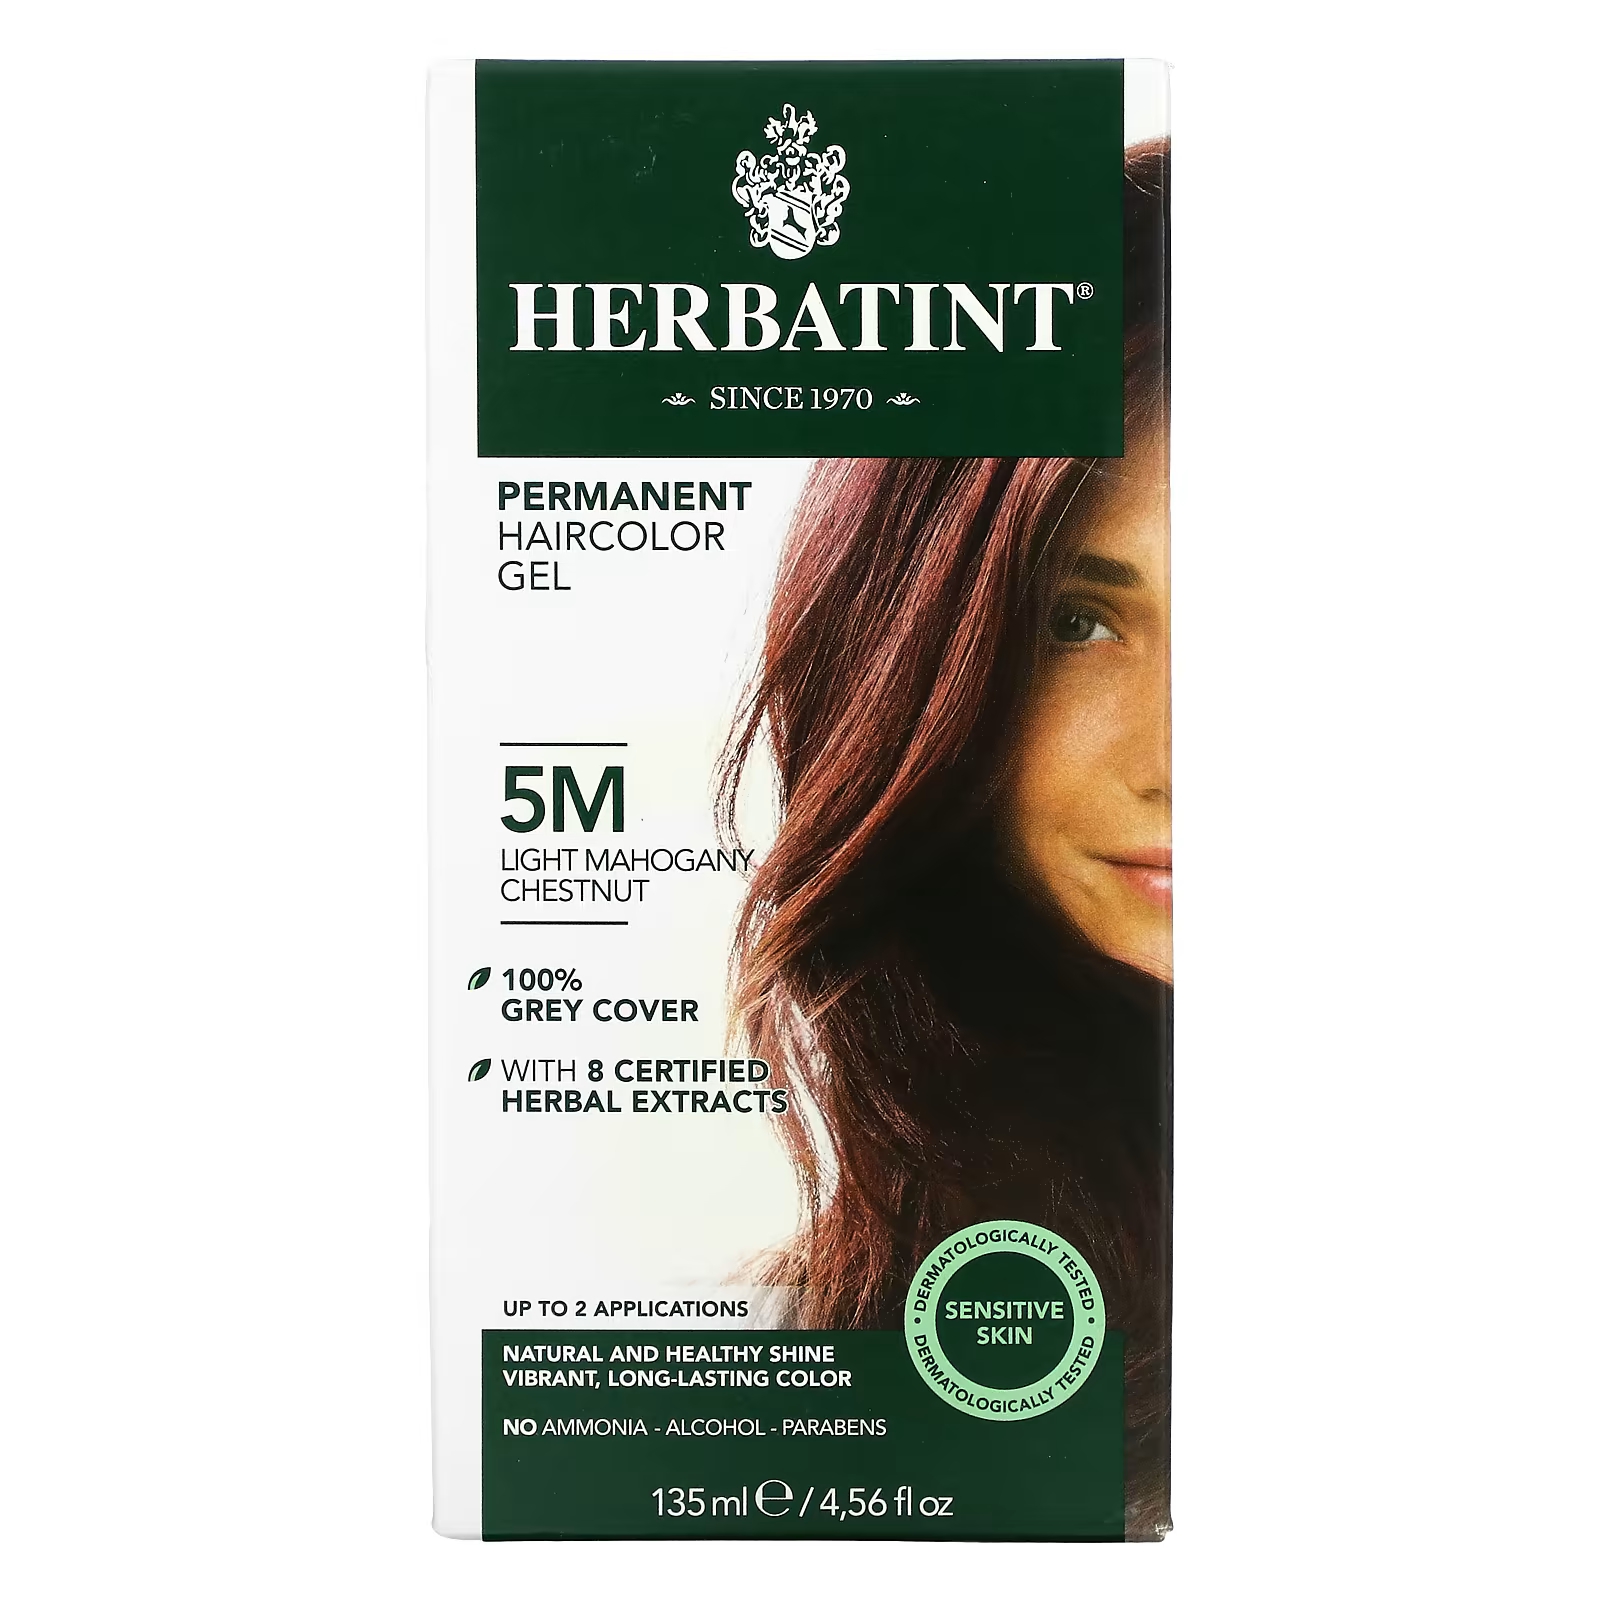 Перманентная гель-краска для волос Herbatint 5M светлый махагони-каштан, 135 мл herbatint перманентная краска гель для волос 5m светлый махагоновый каштан 4 56 жидкой унции 135 мл